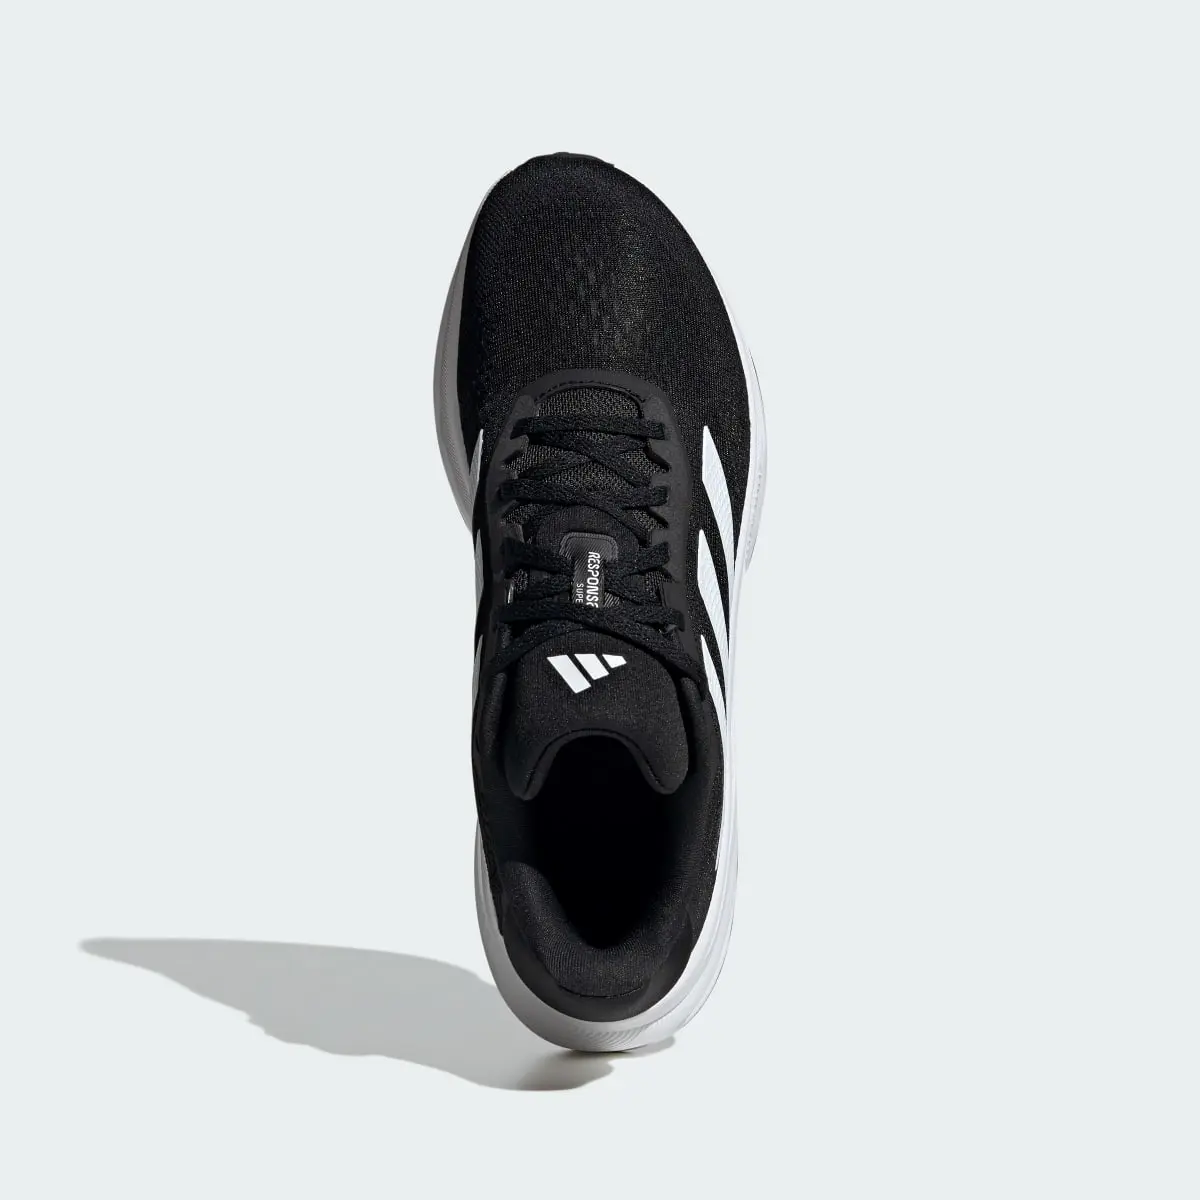 Adidas Response Super Shoes. 3